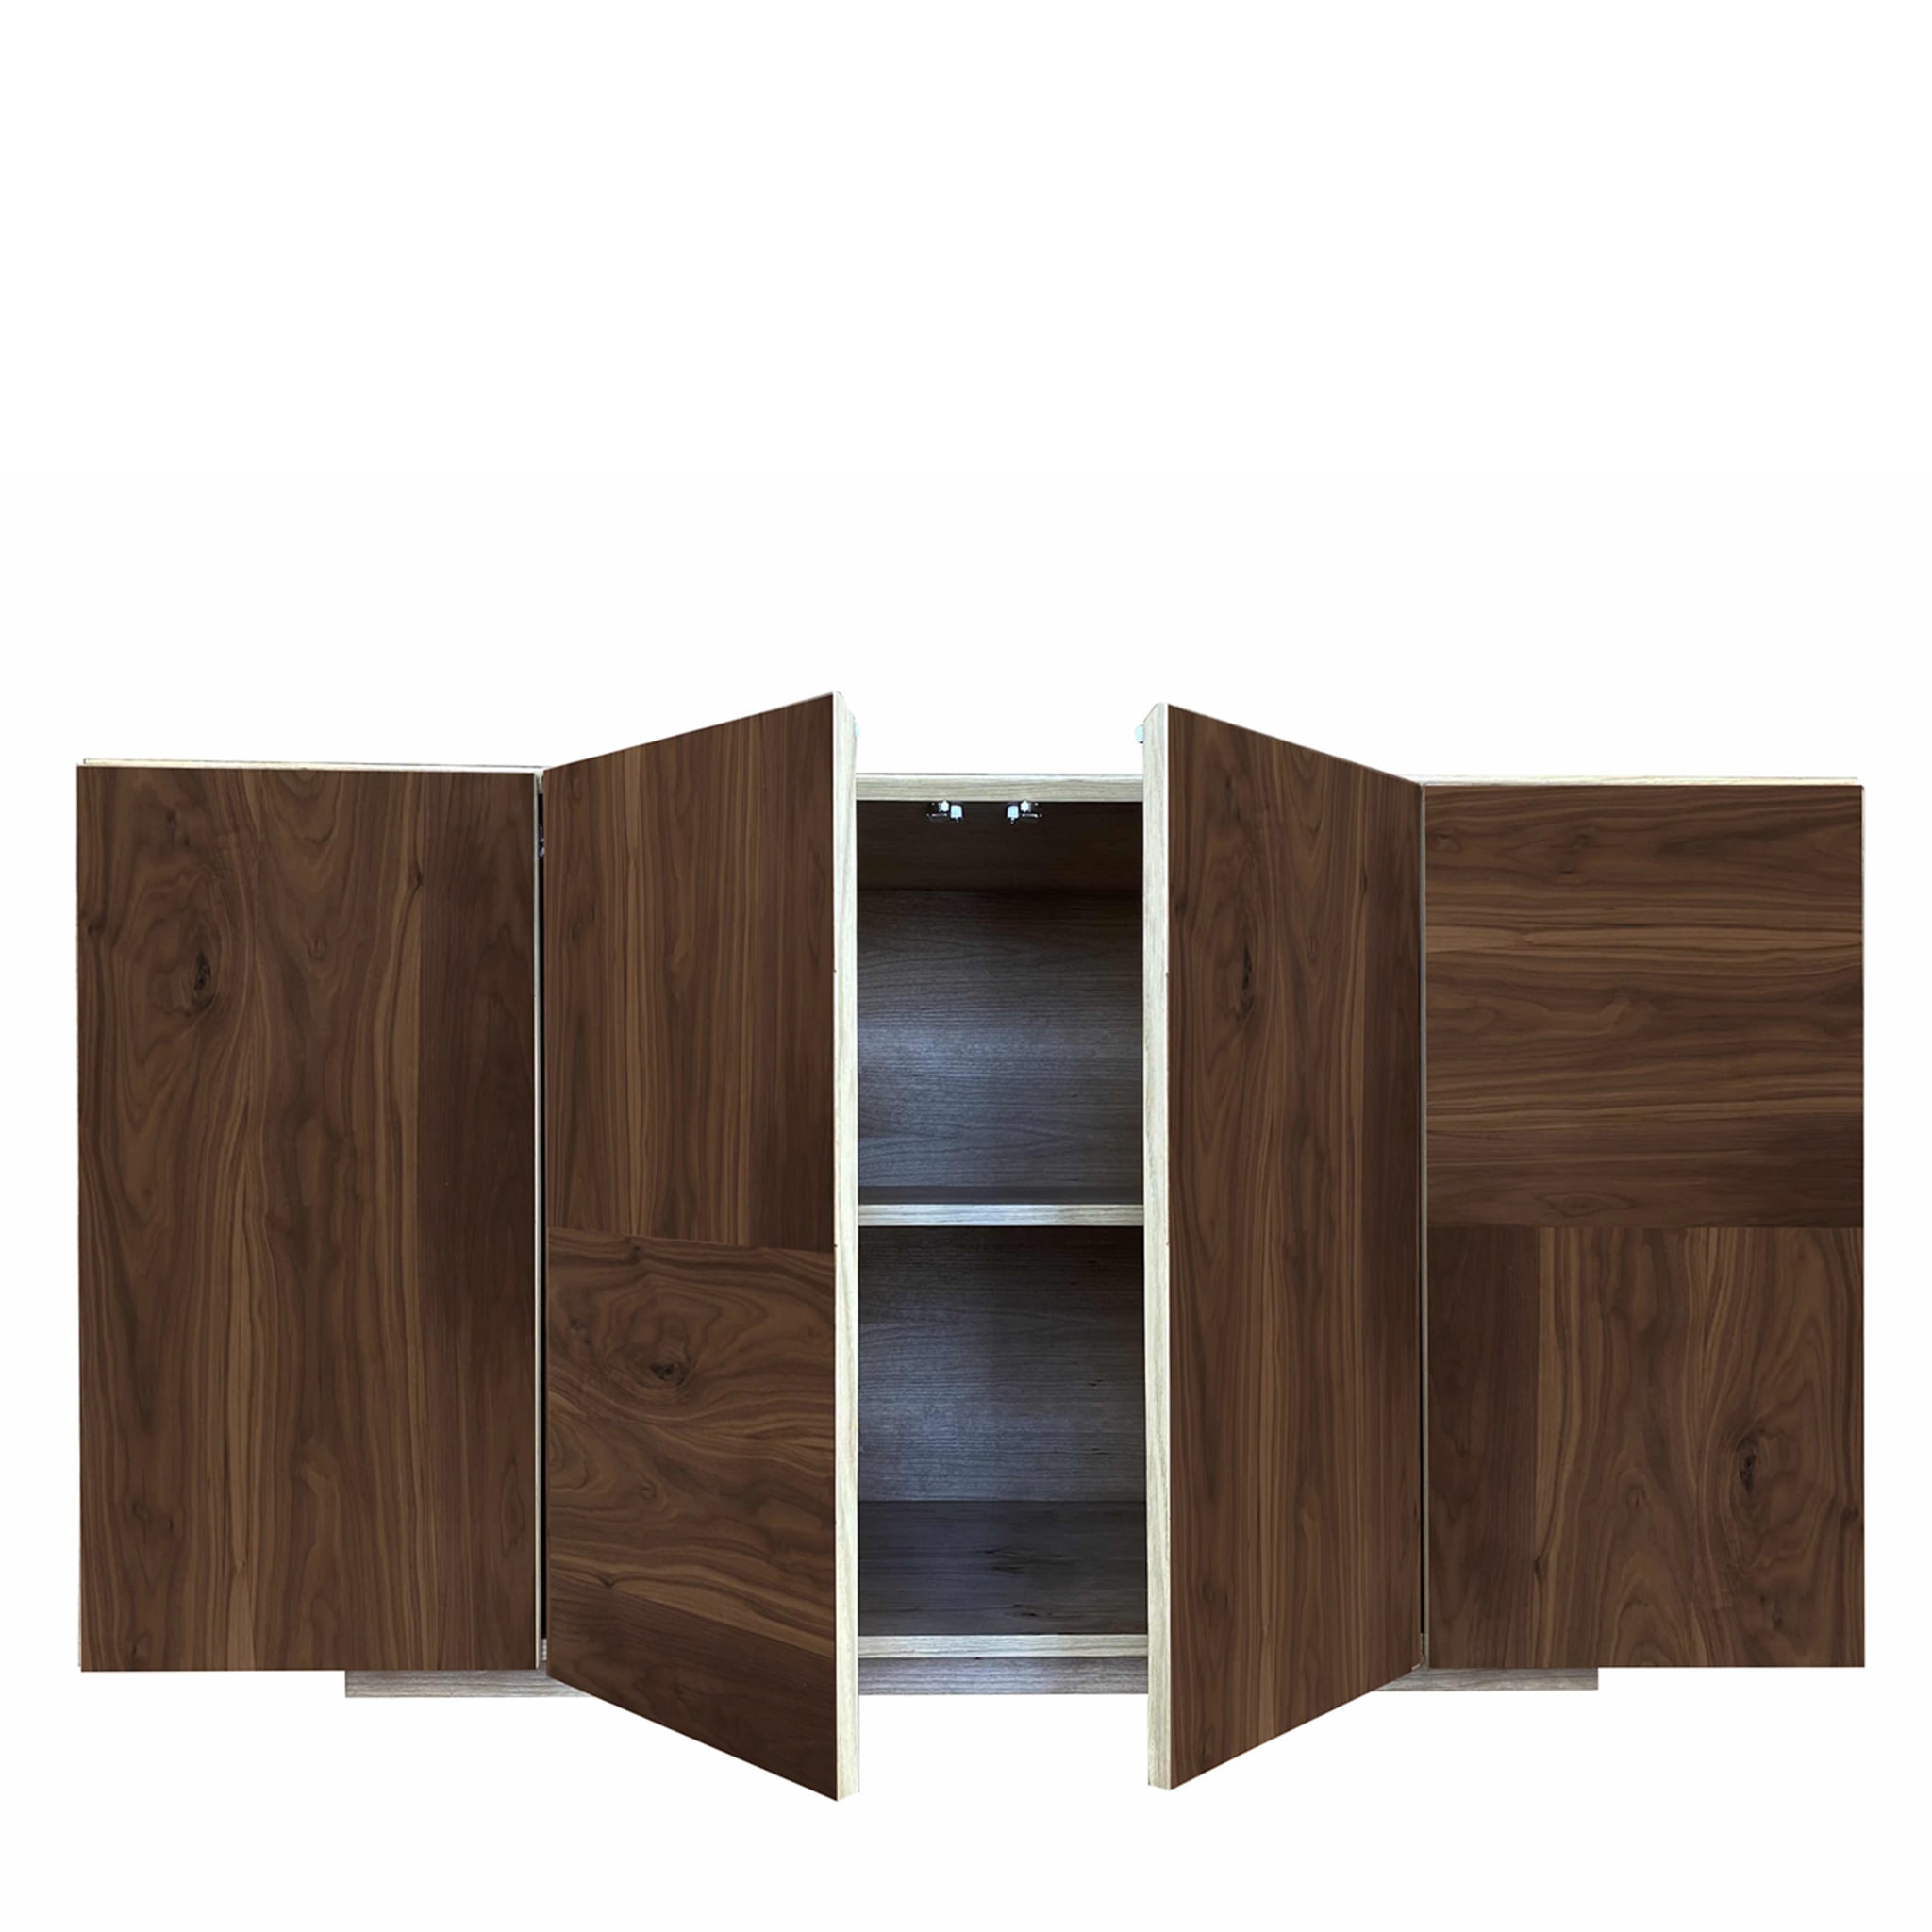 Boccadarno Uno 4-Door Walnut Sideboard by Meccani Studio - Alternative view 5